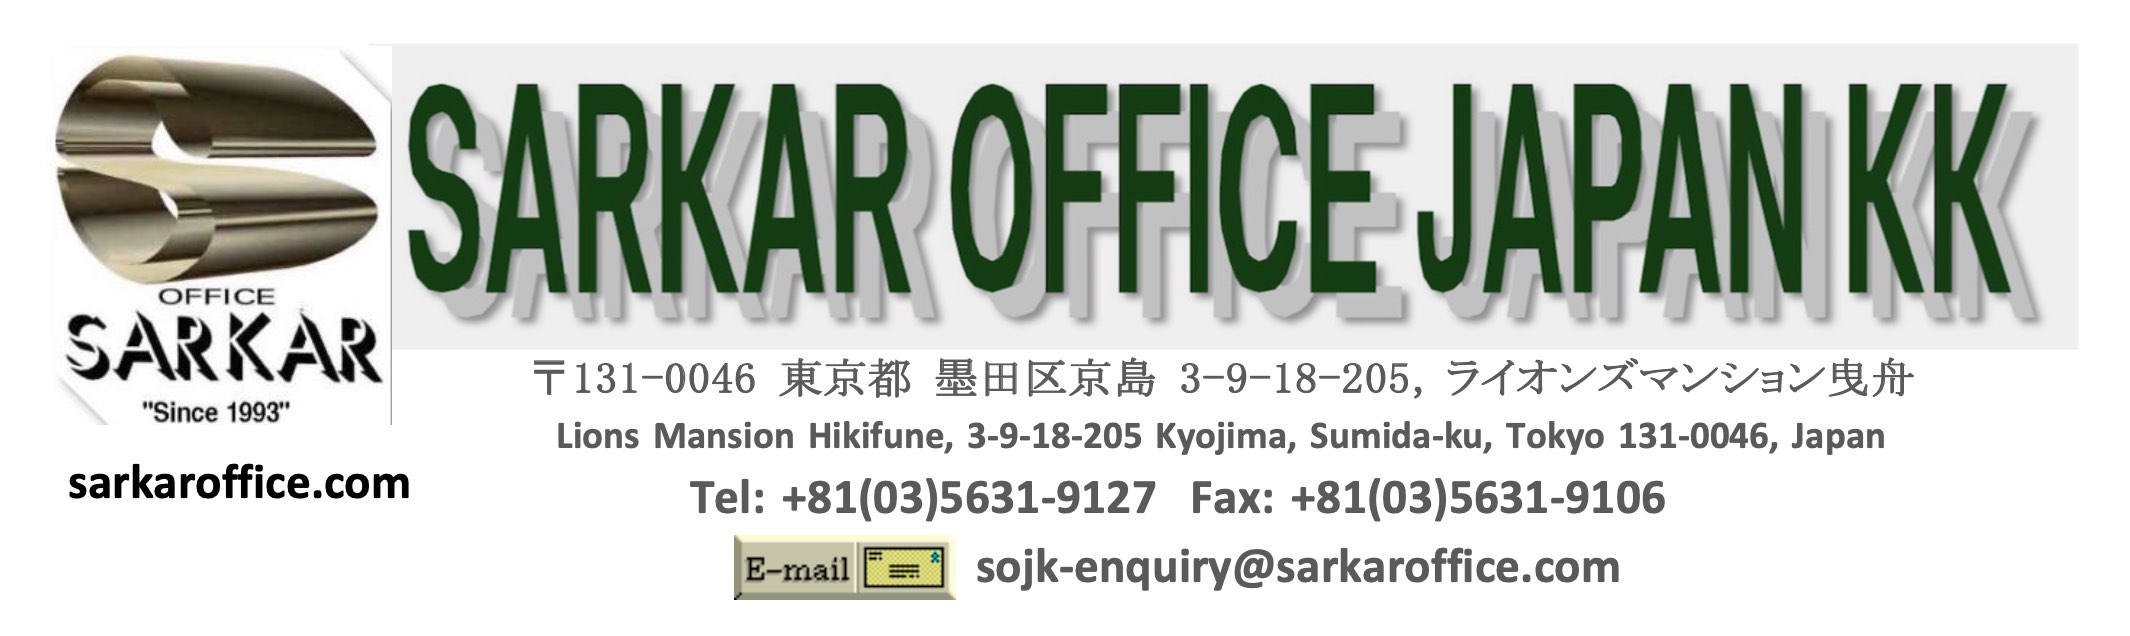 Sarkar Office Japan KK サーカーオフィスジャパン 株式会社